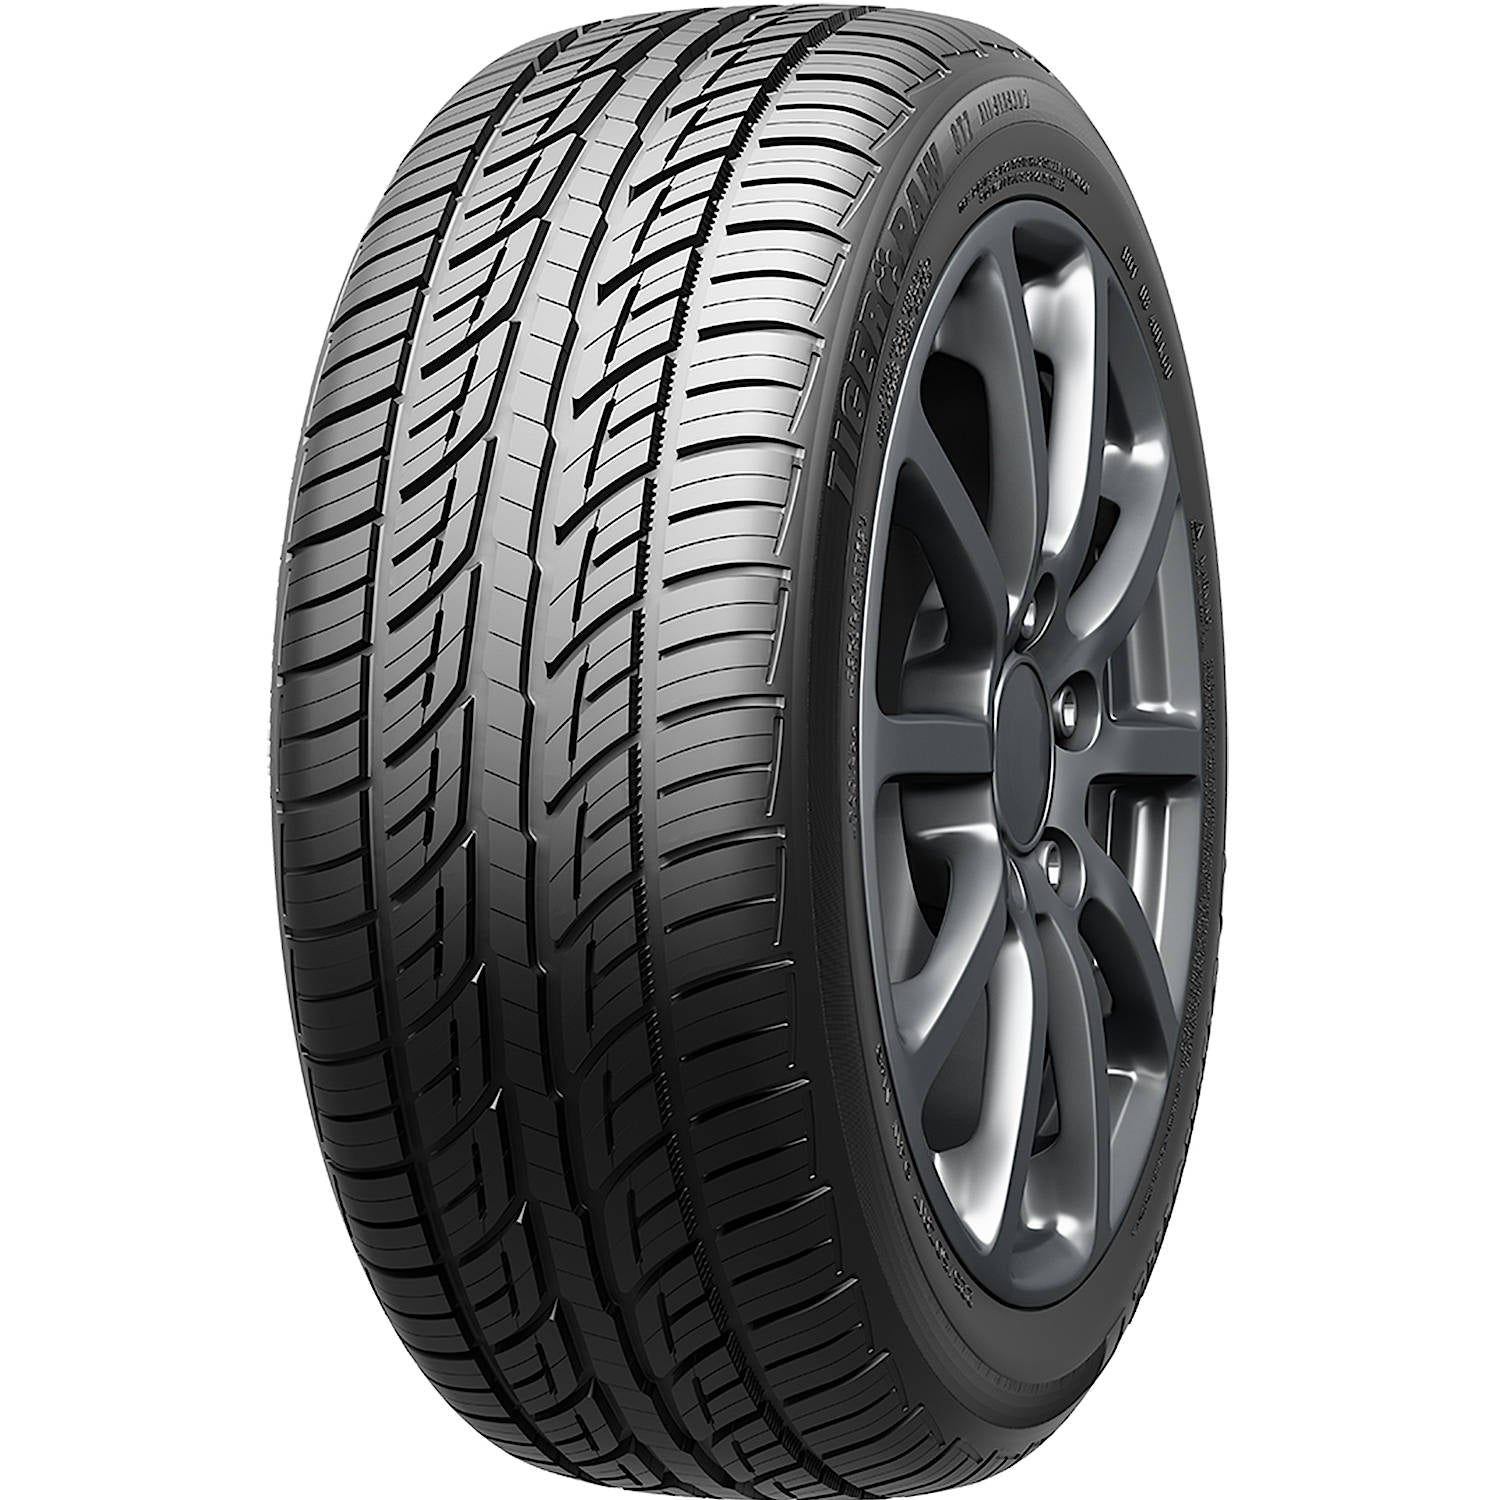 UNIROYAL TIGER PAW GTZ A/S 2 235/40R19 (26.4X9.3R 19) Tires